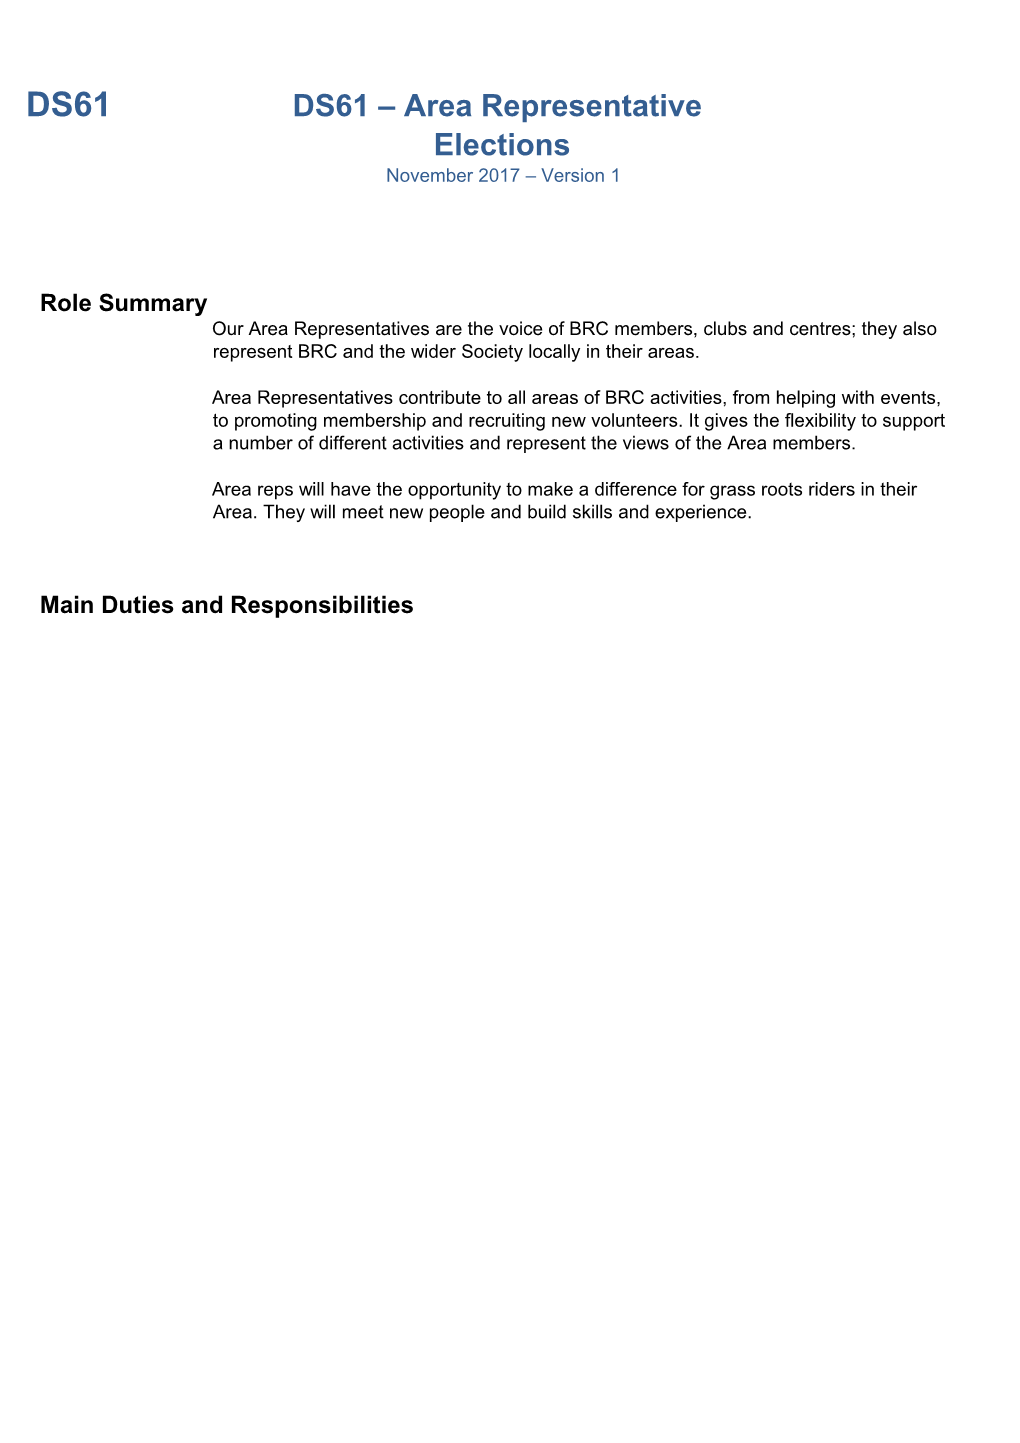 BRC Data Sheet DS61 Area Representative Elections